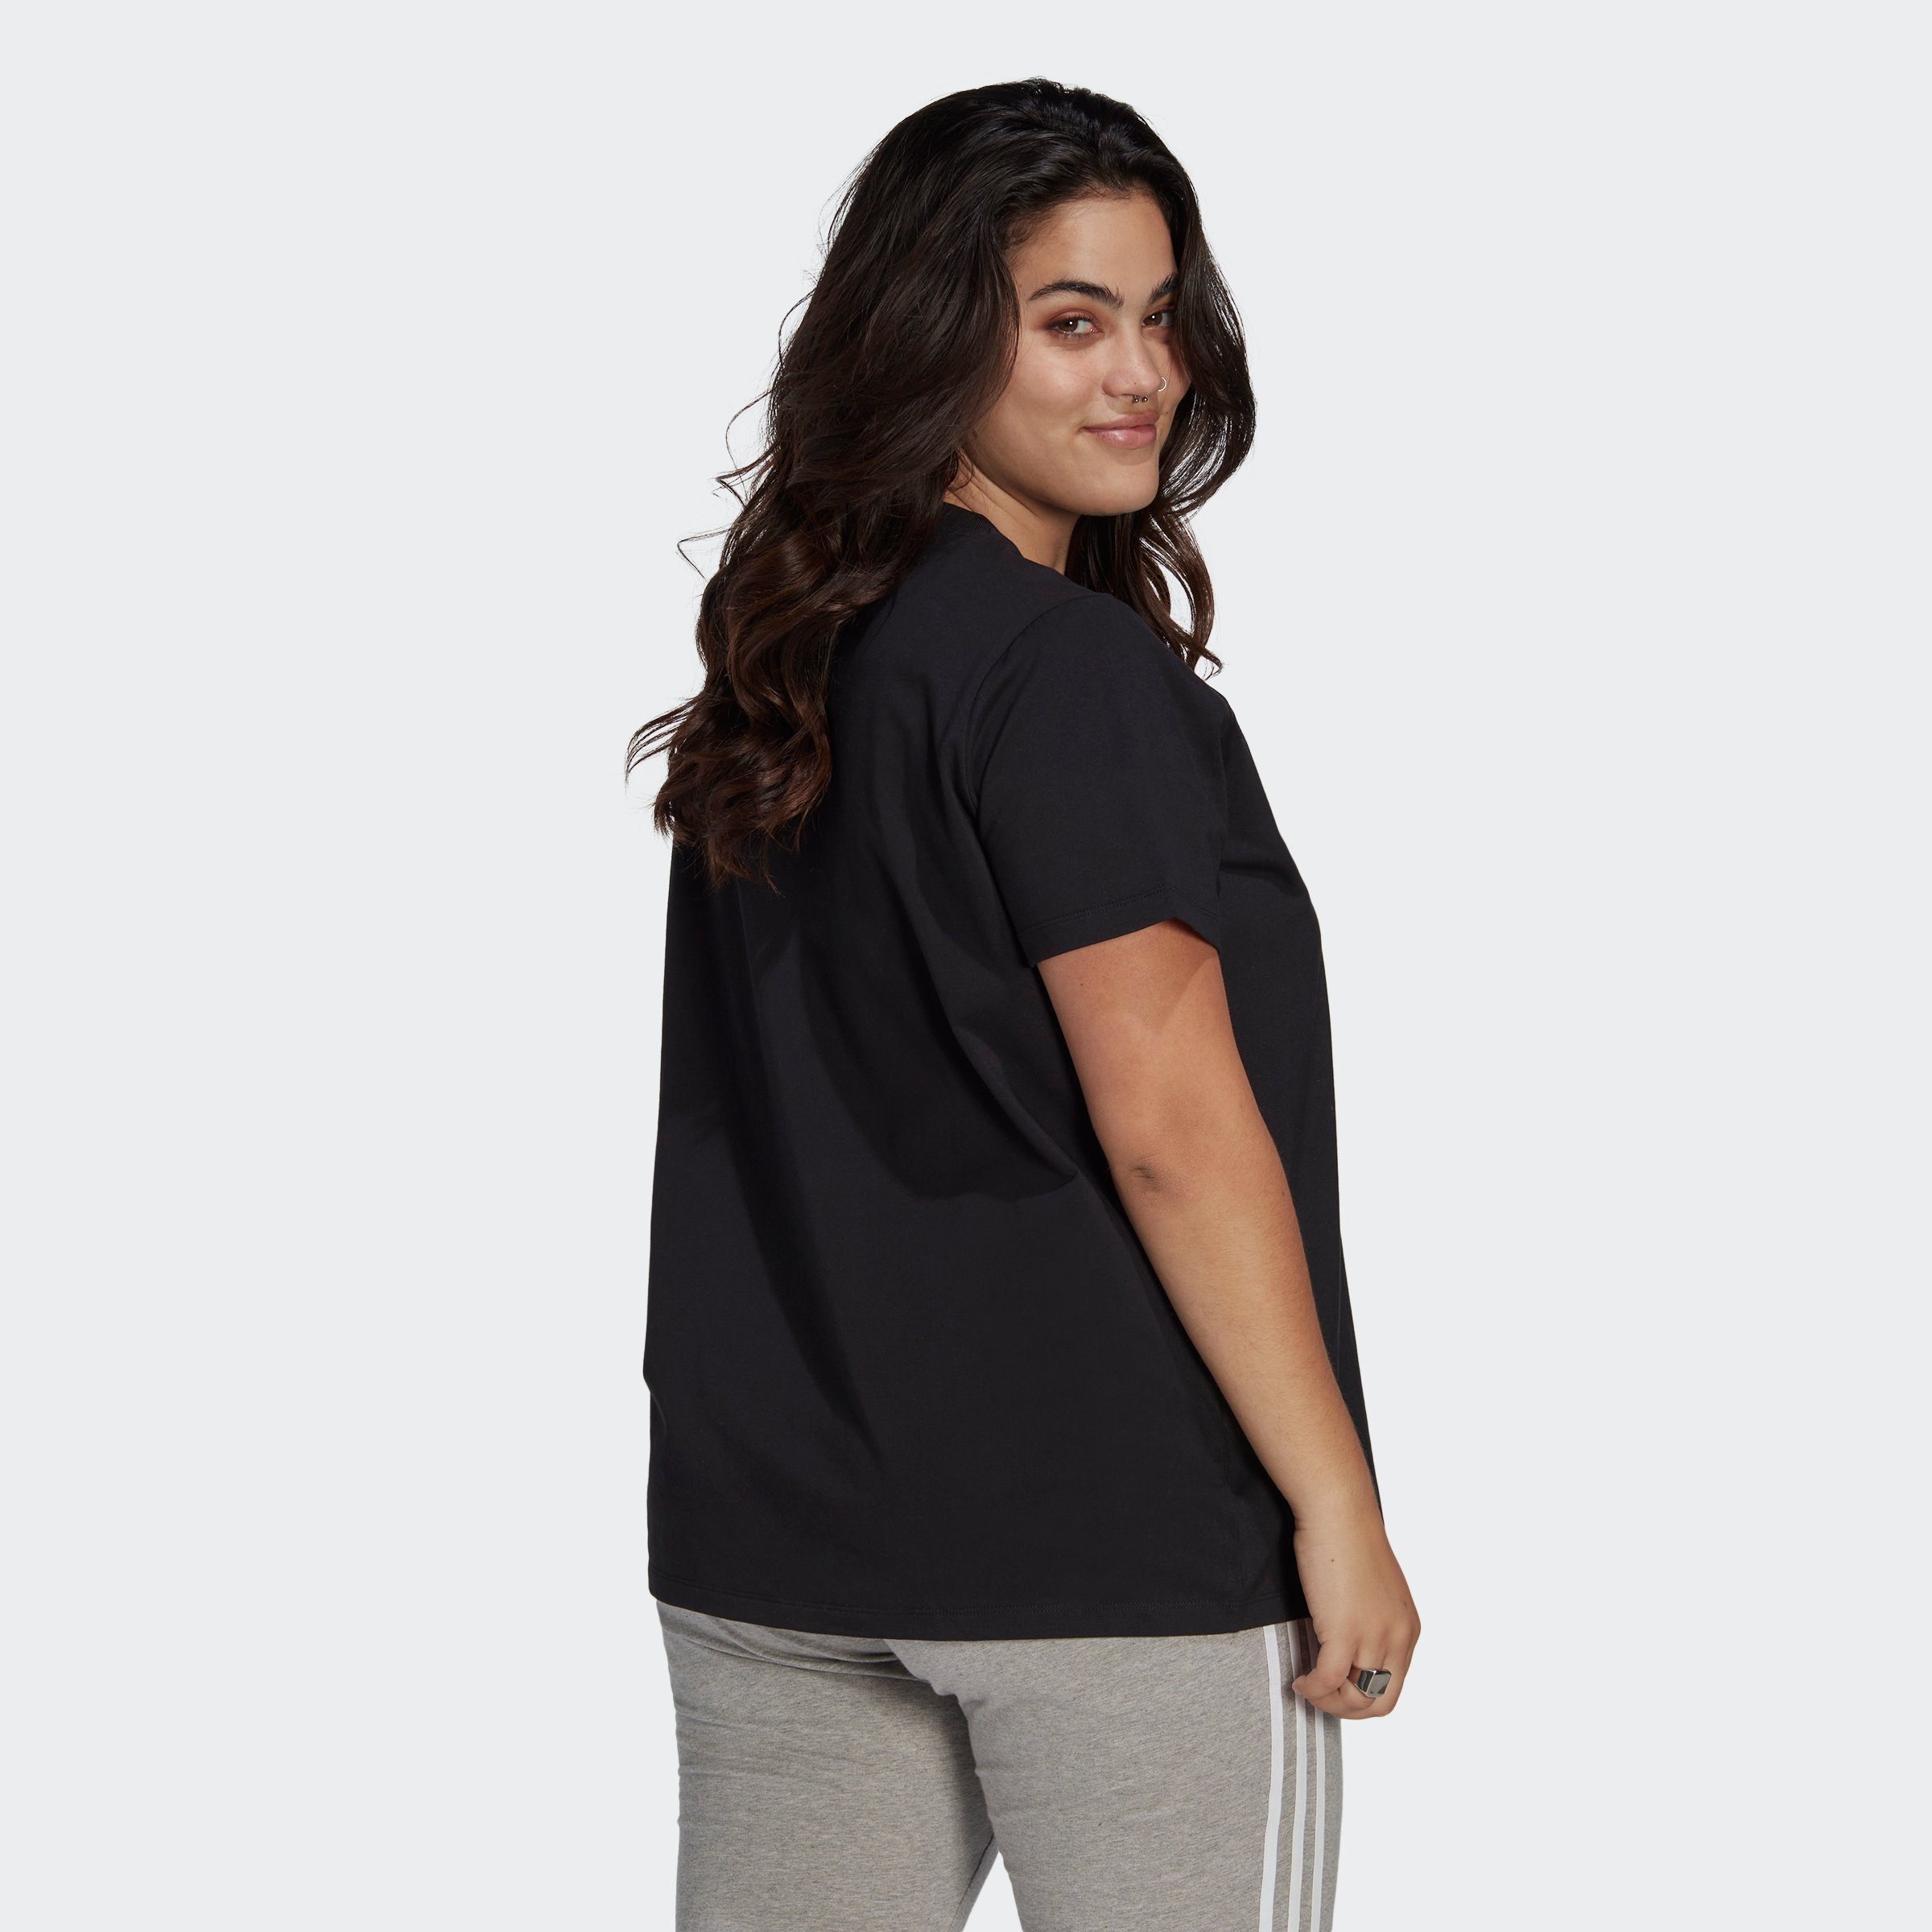 GRÖSSEN GROSSE TREFOIL Black Originals – T-Shirt ADICOLOR adidas CLASSICS